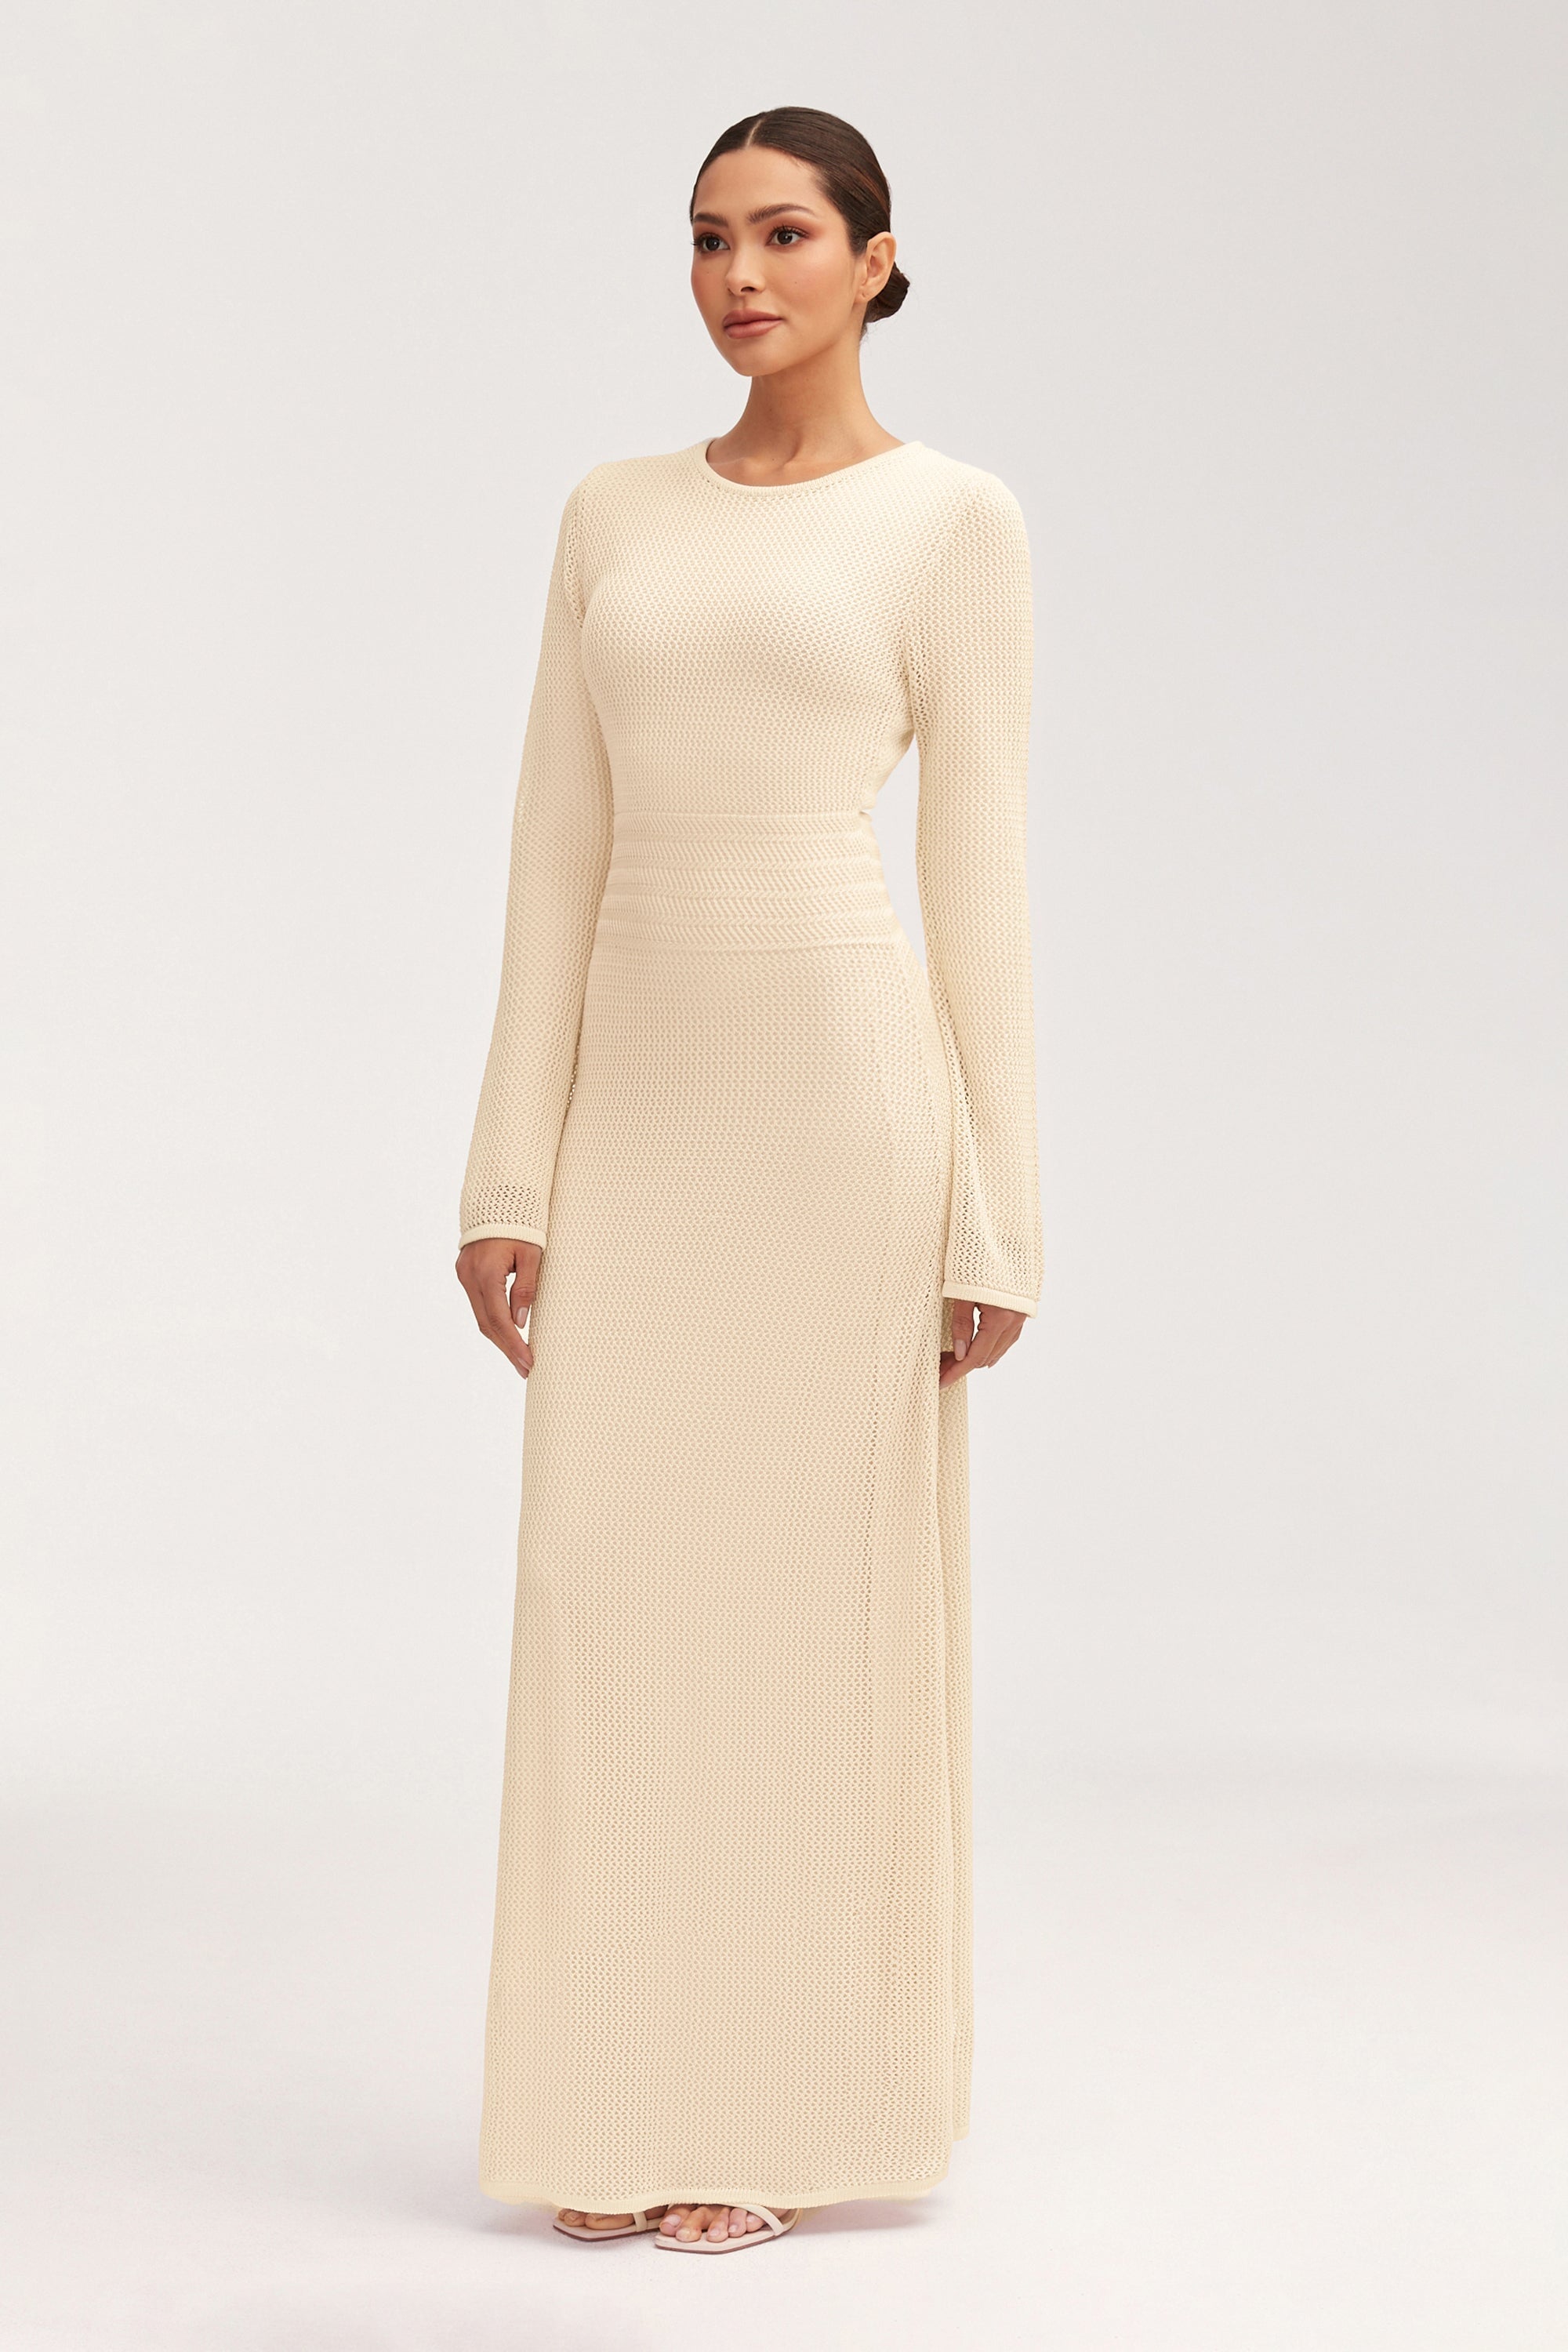 Rachel Crochet Maxi Dress - Off White Clothing Veiled 